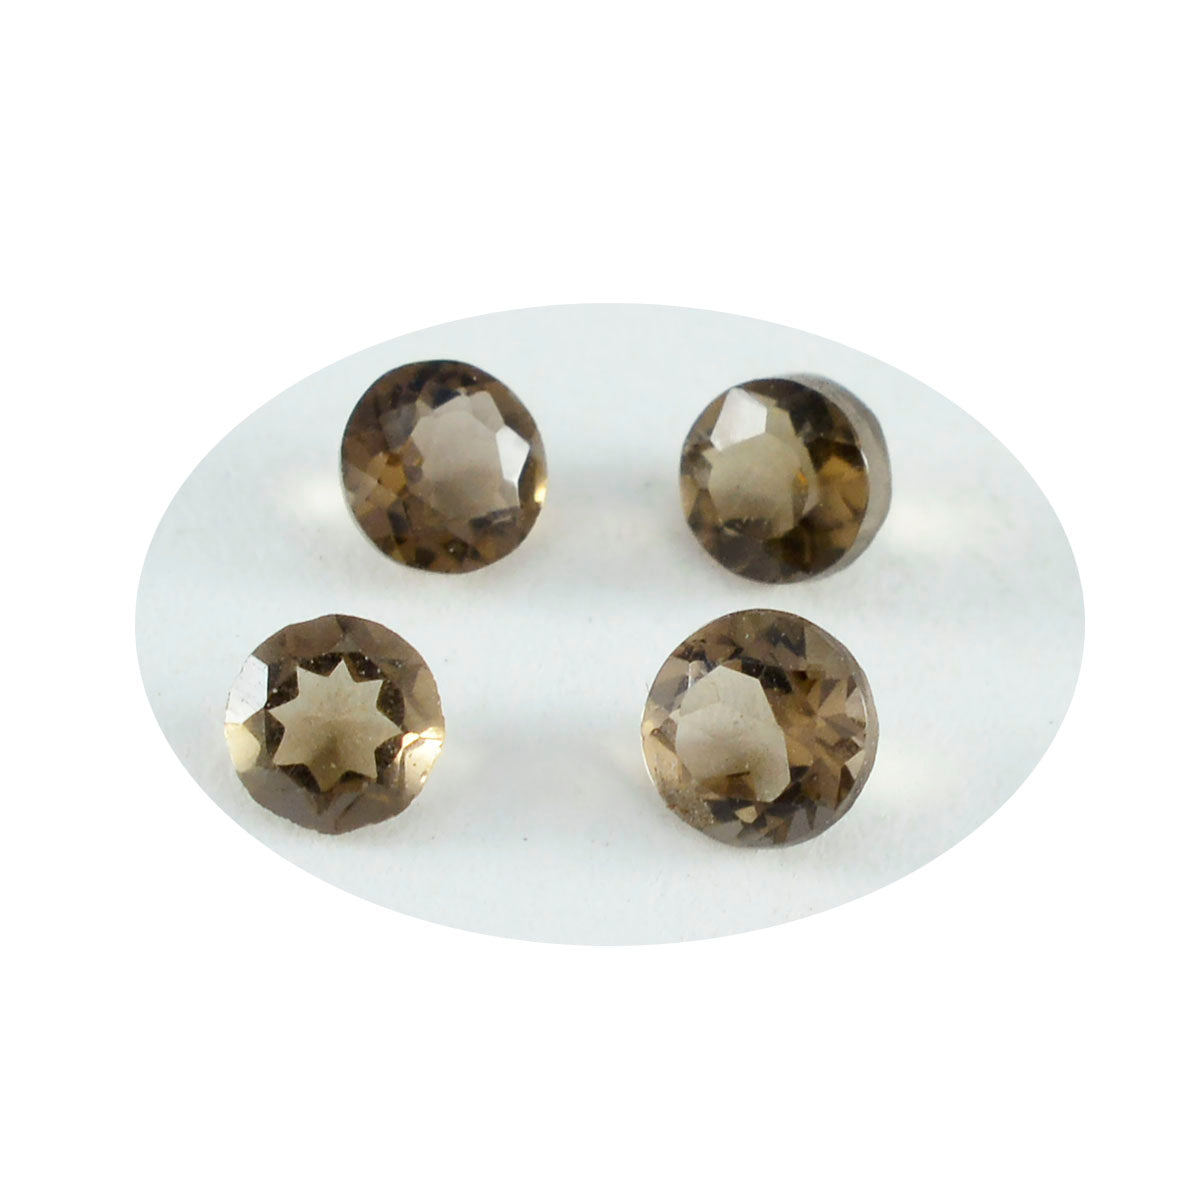 Riyogems 1PC Natural Brown Smoky Quartz Faceted 2x2 mm Round Shape A+ Quality Gemstone